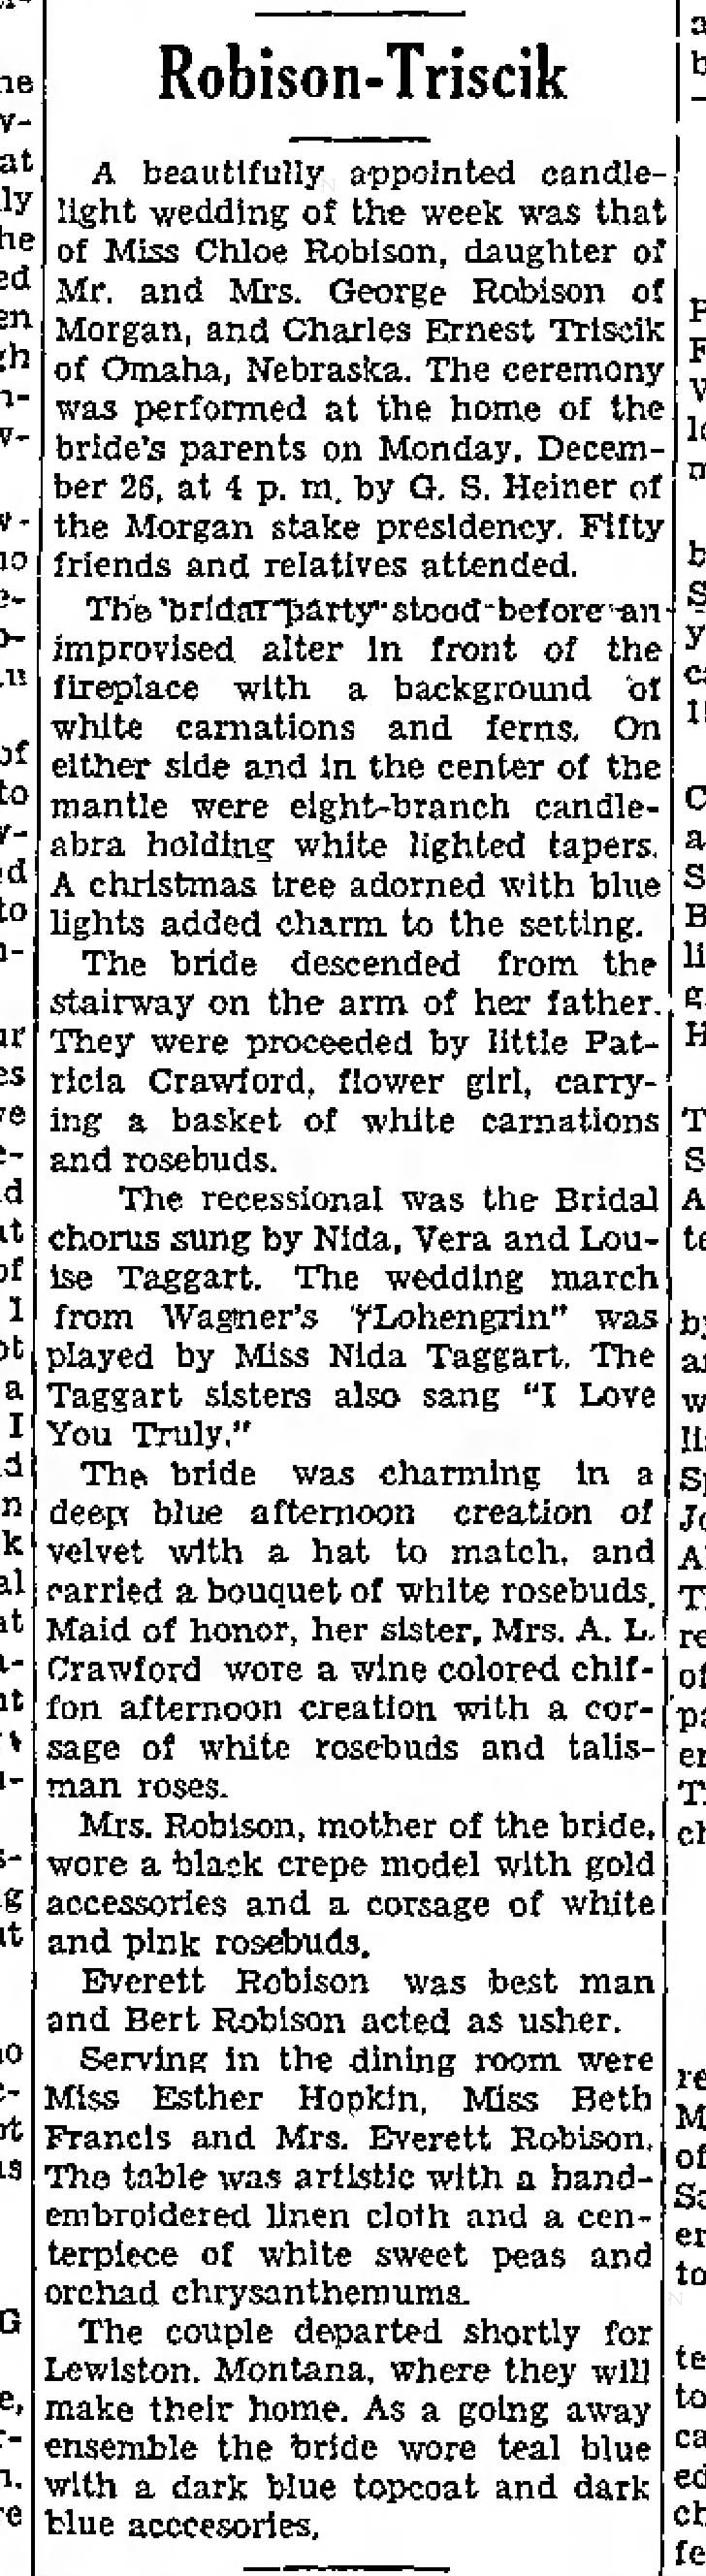 Robison Triscik Marriage.
Morgan County News  Morgan, Utah
Fri, Dec 30, 1938 – 1